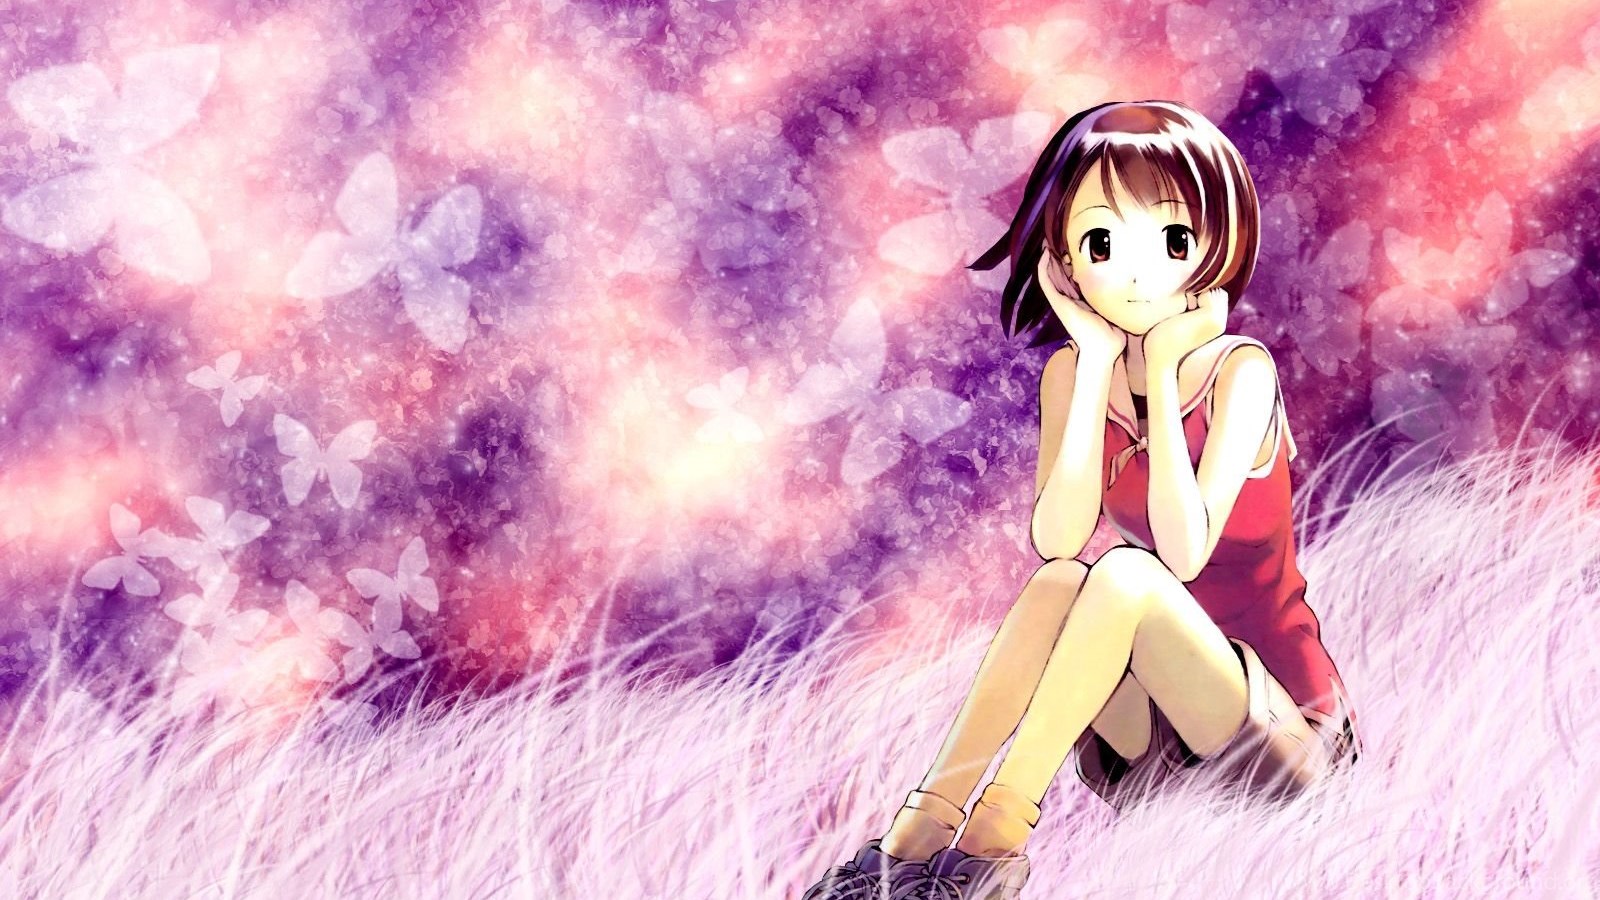 Download Free Cute Anime Girl Desktop Wallpapers Pictur Popular 1600x900 De...